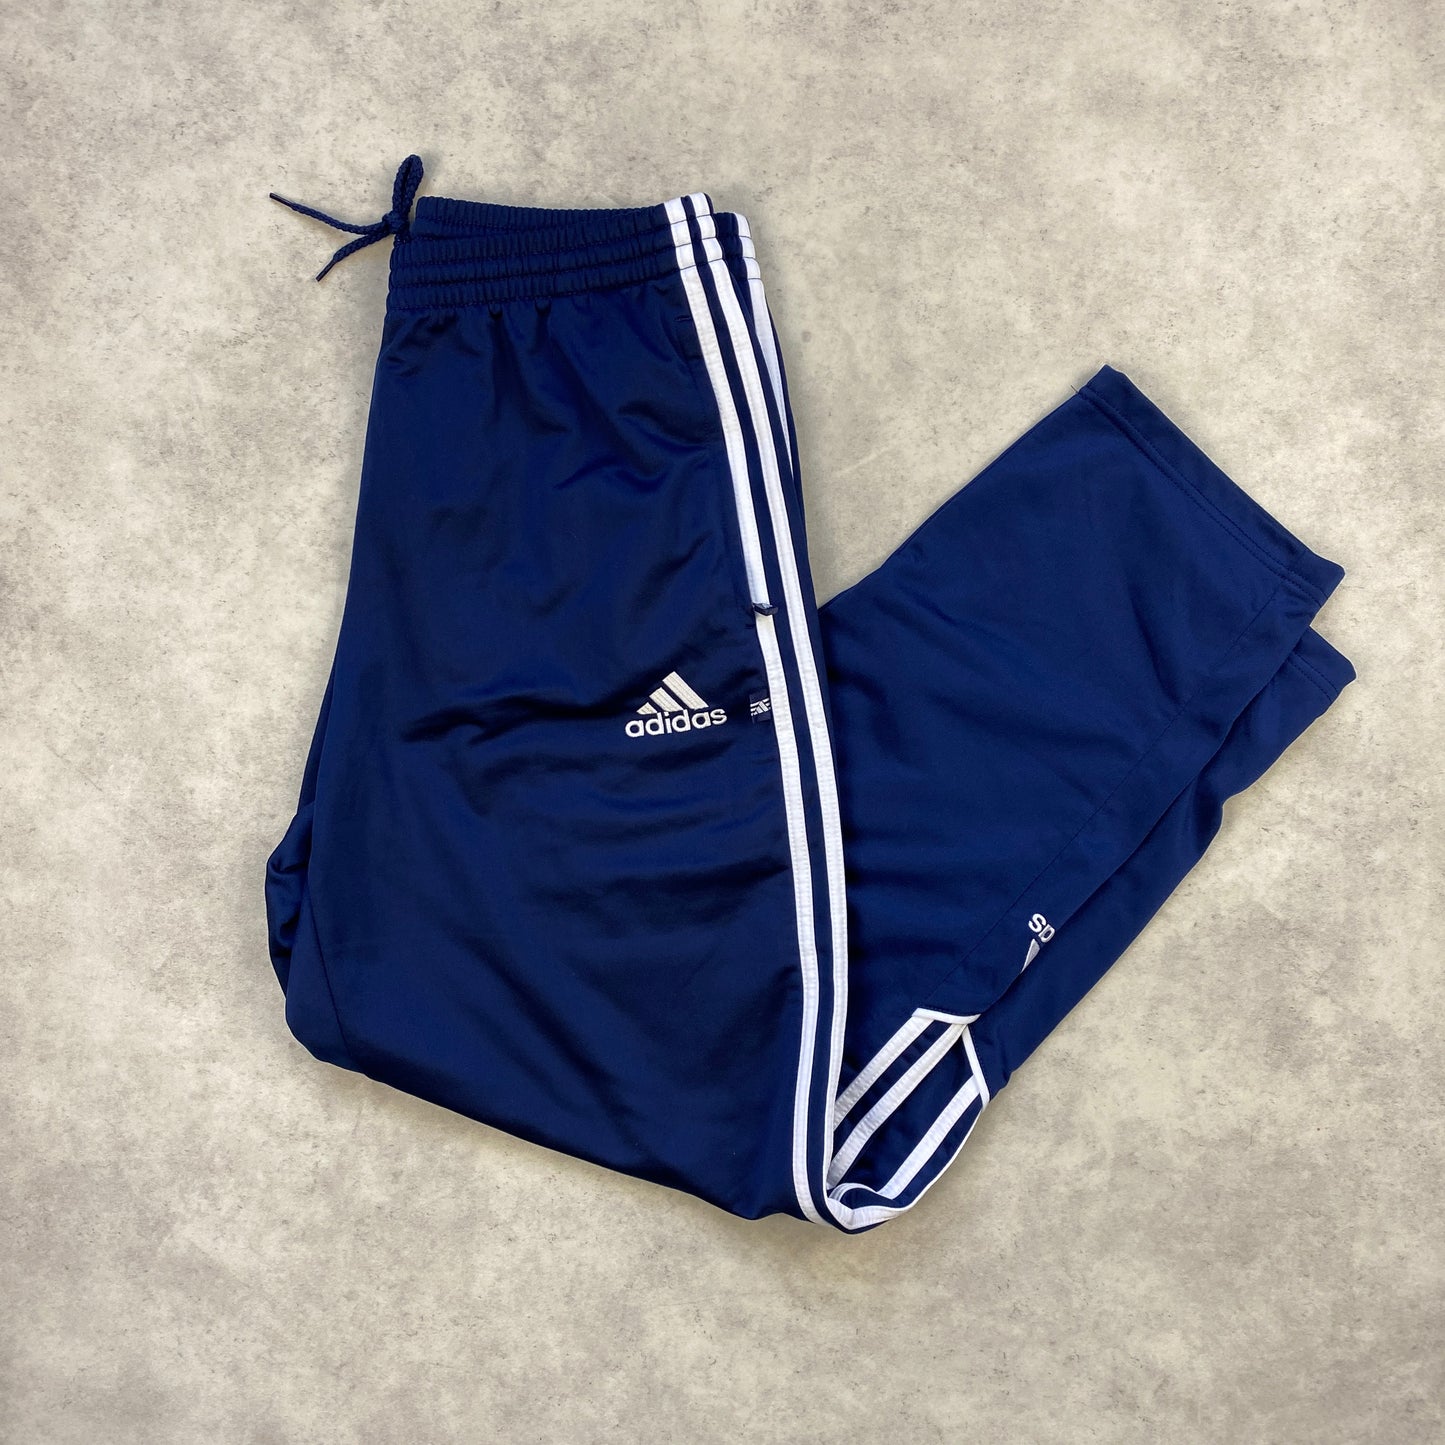 Adidas track pants (L)